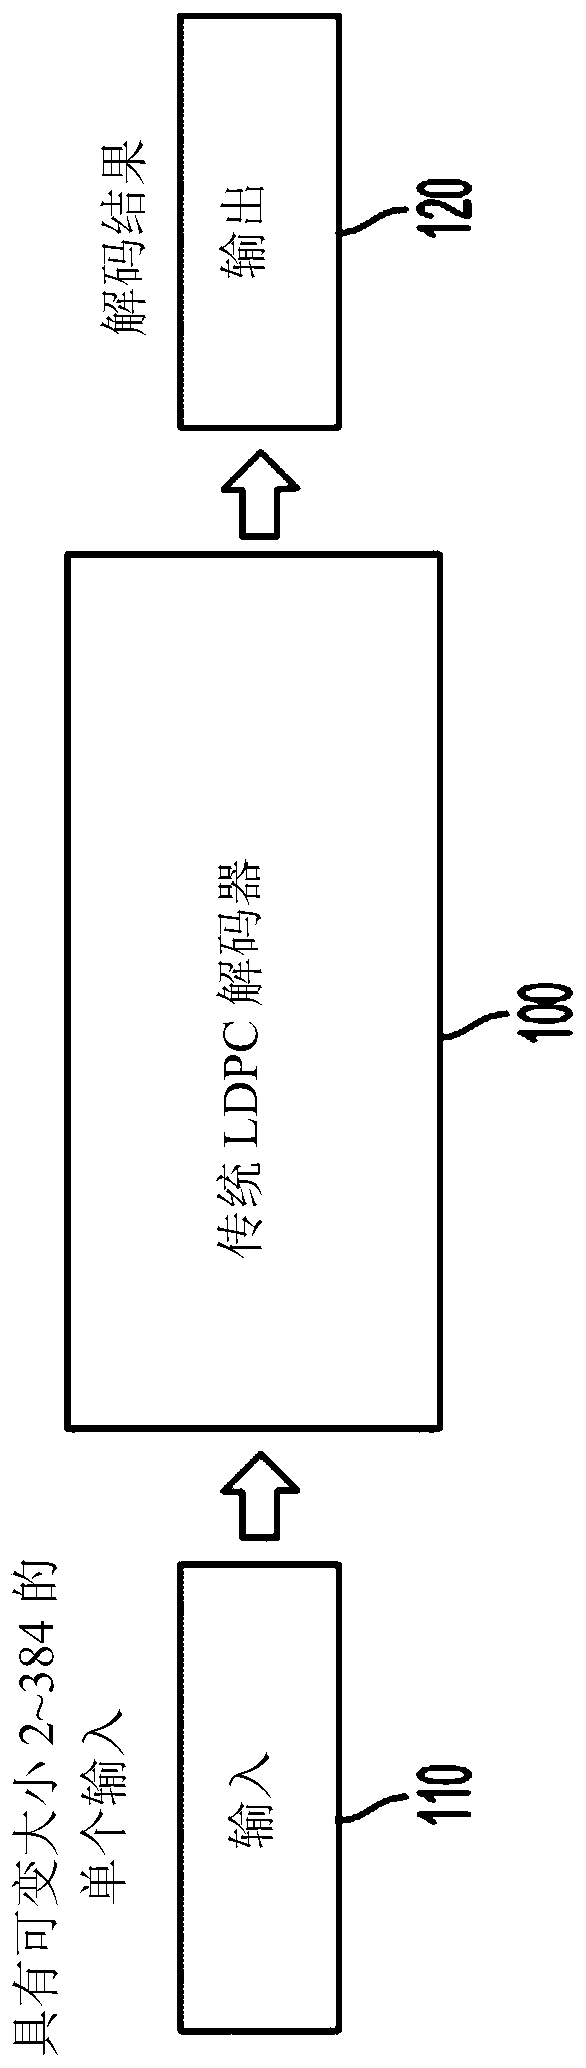 Parallel LDPC decoder